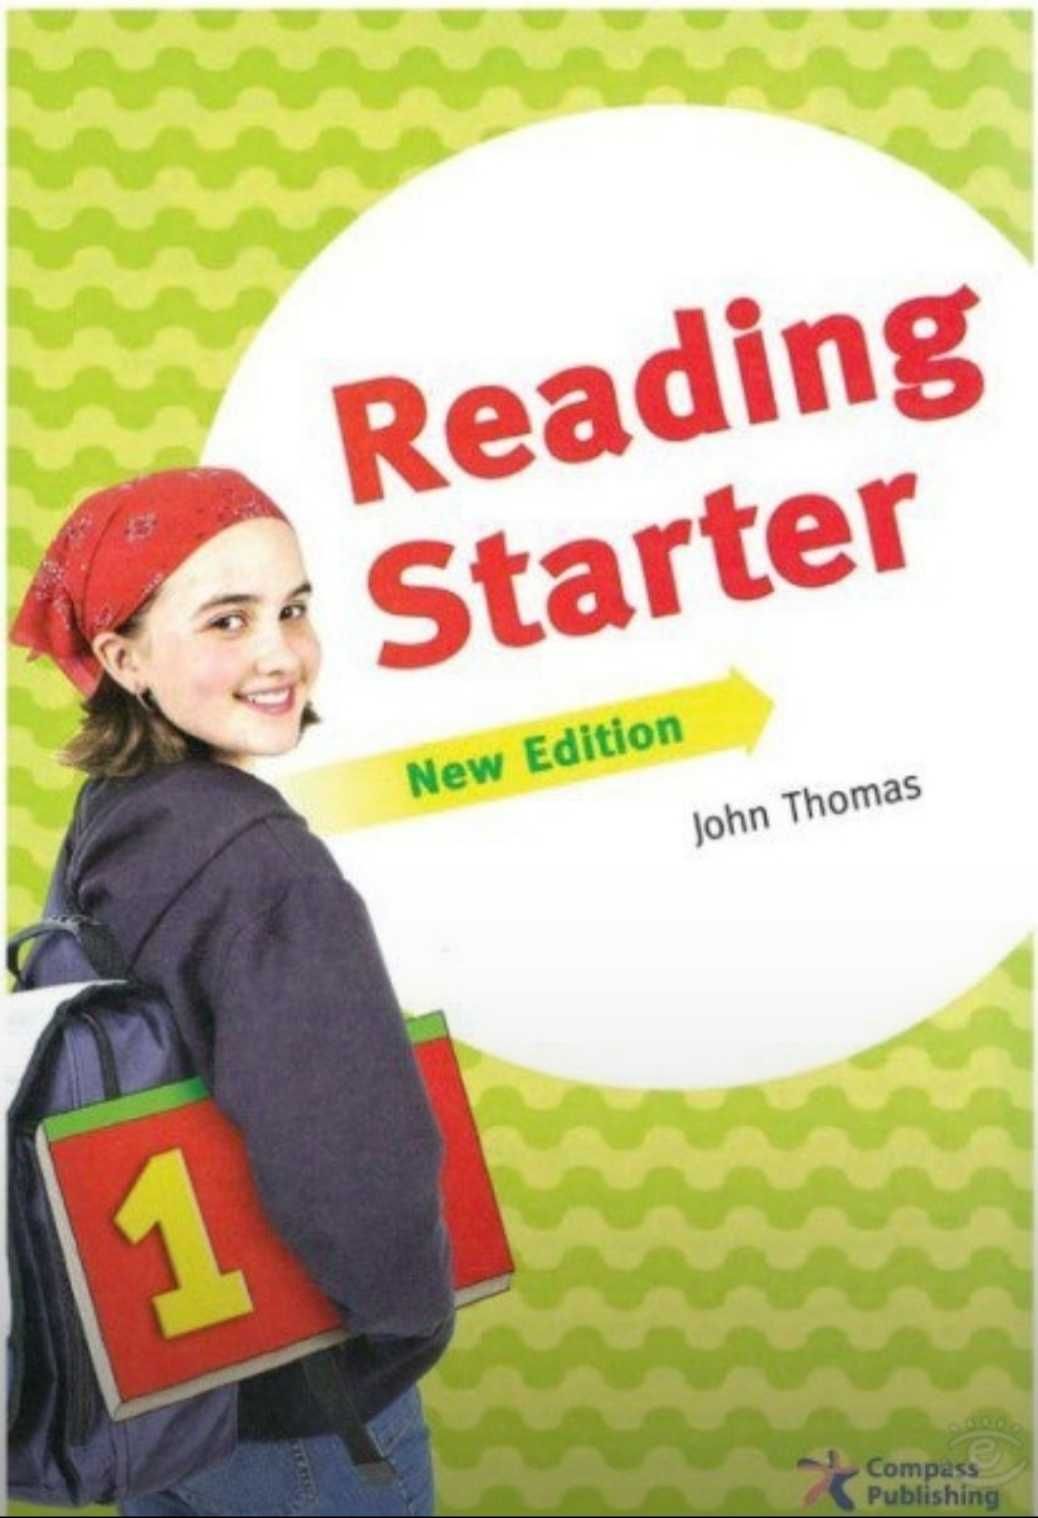 Reading Starter 1,2,3. Ielts writing task 1. 30 day reading challenge